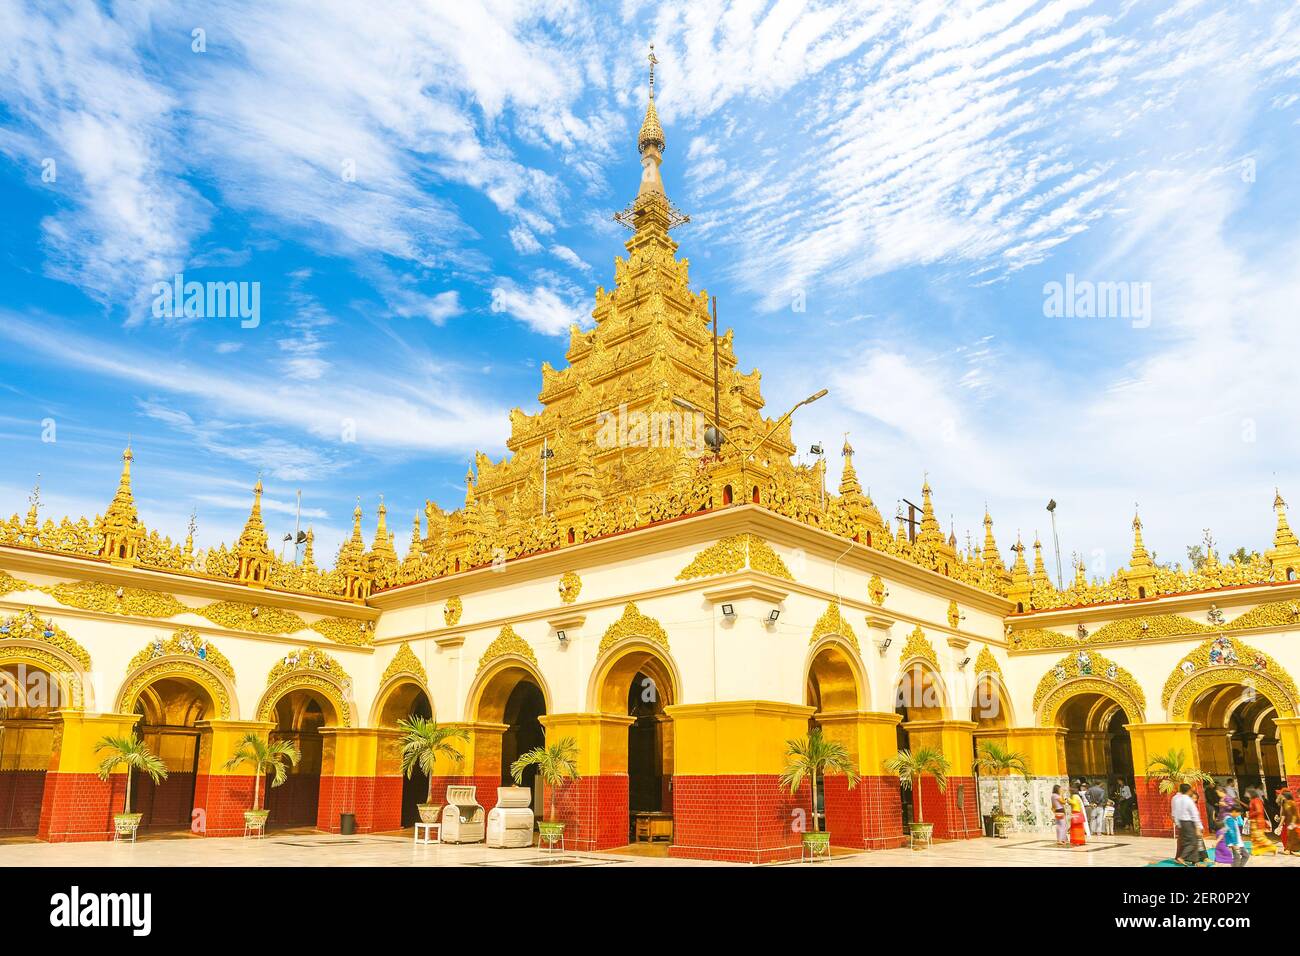 The Mahamuni Pagoda Complex in mandalay, myanmar burma. Stock Photo